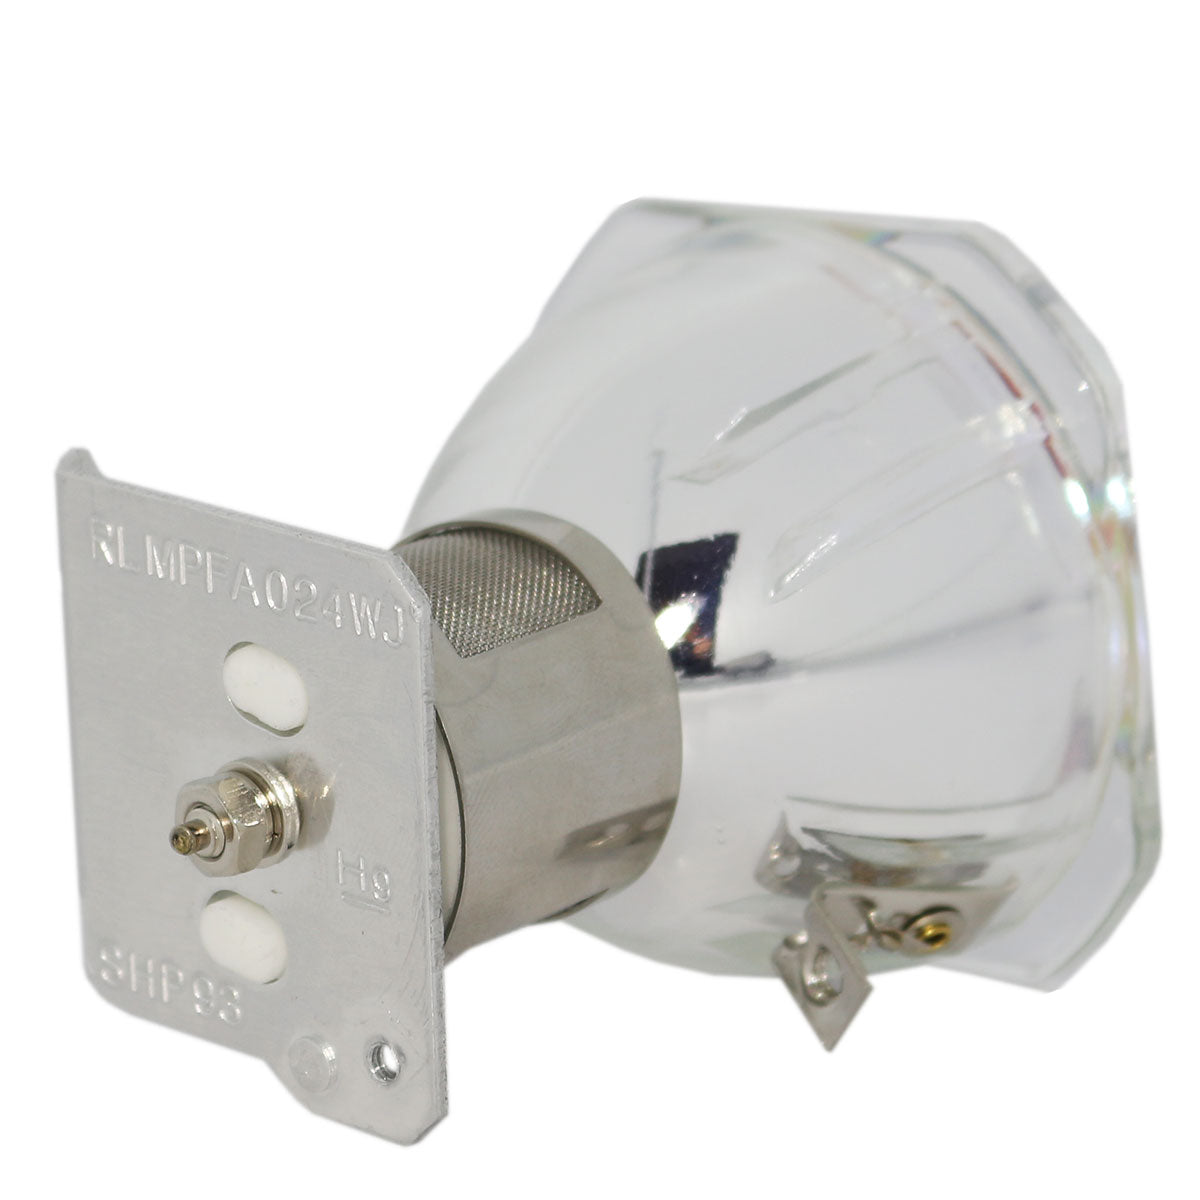 Marantz LU-4001VP Phoenix Projector Bare Lamp